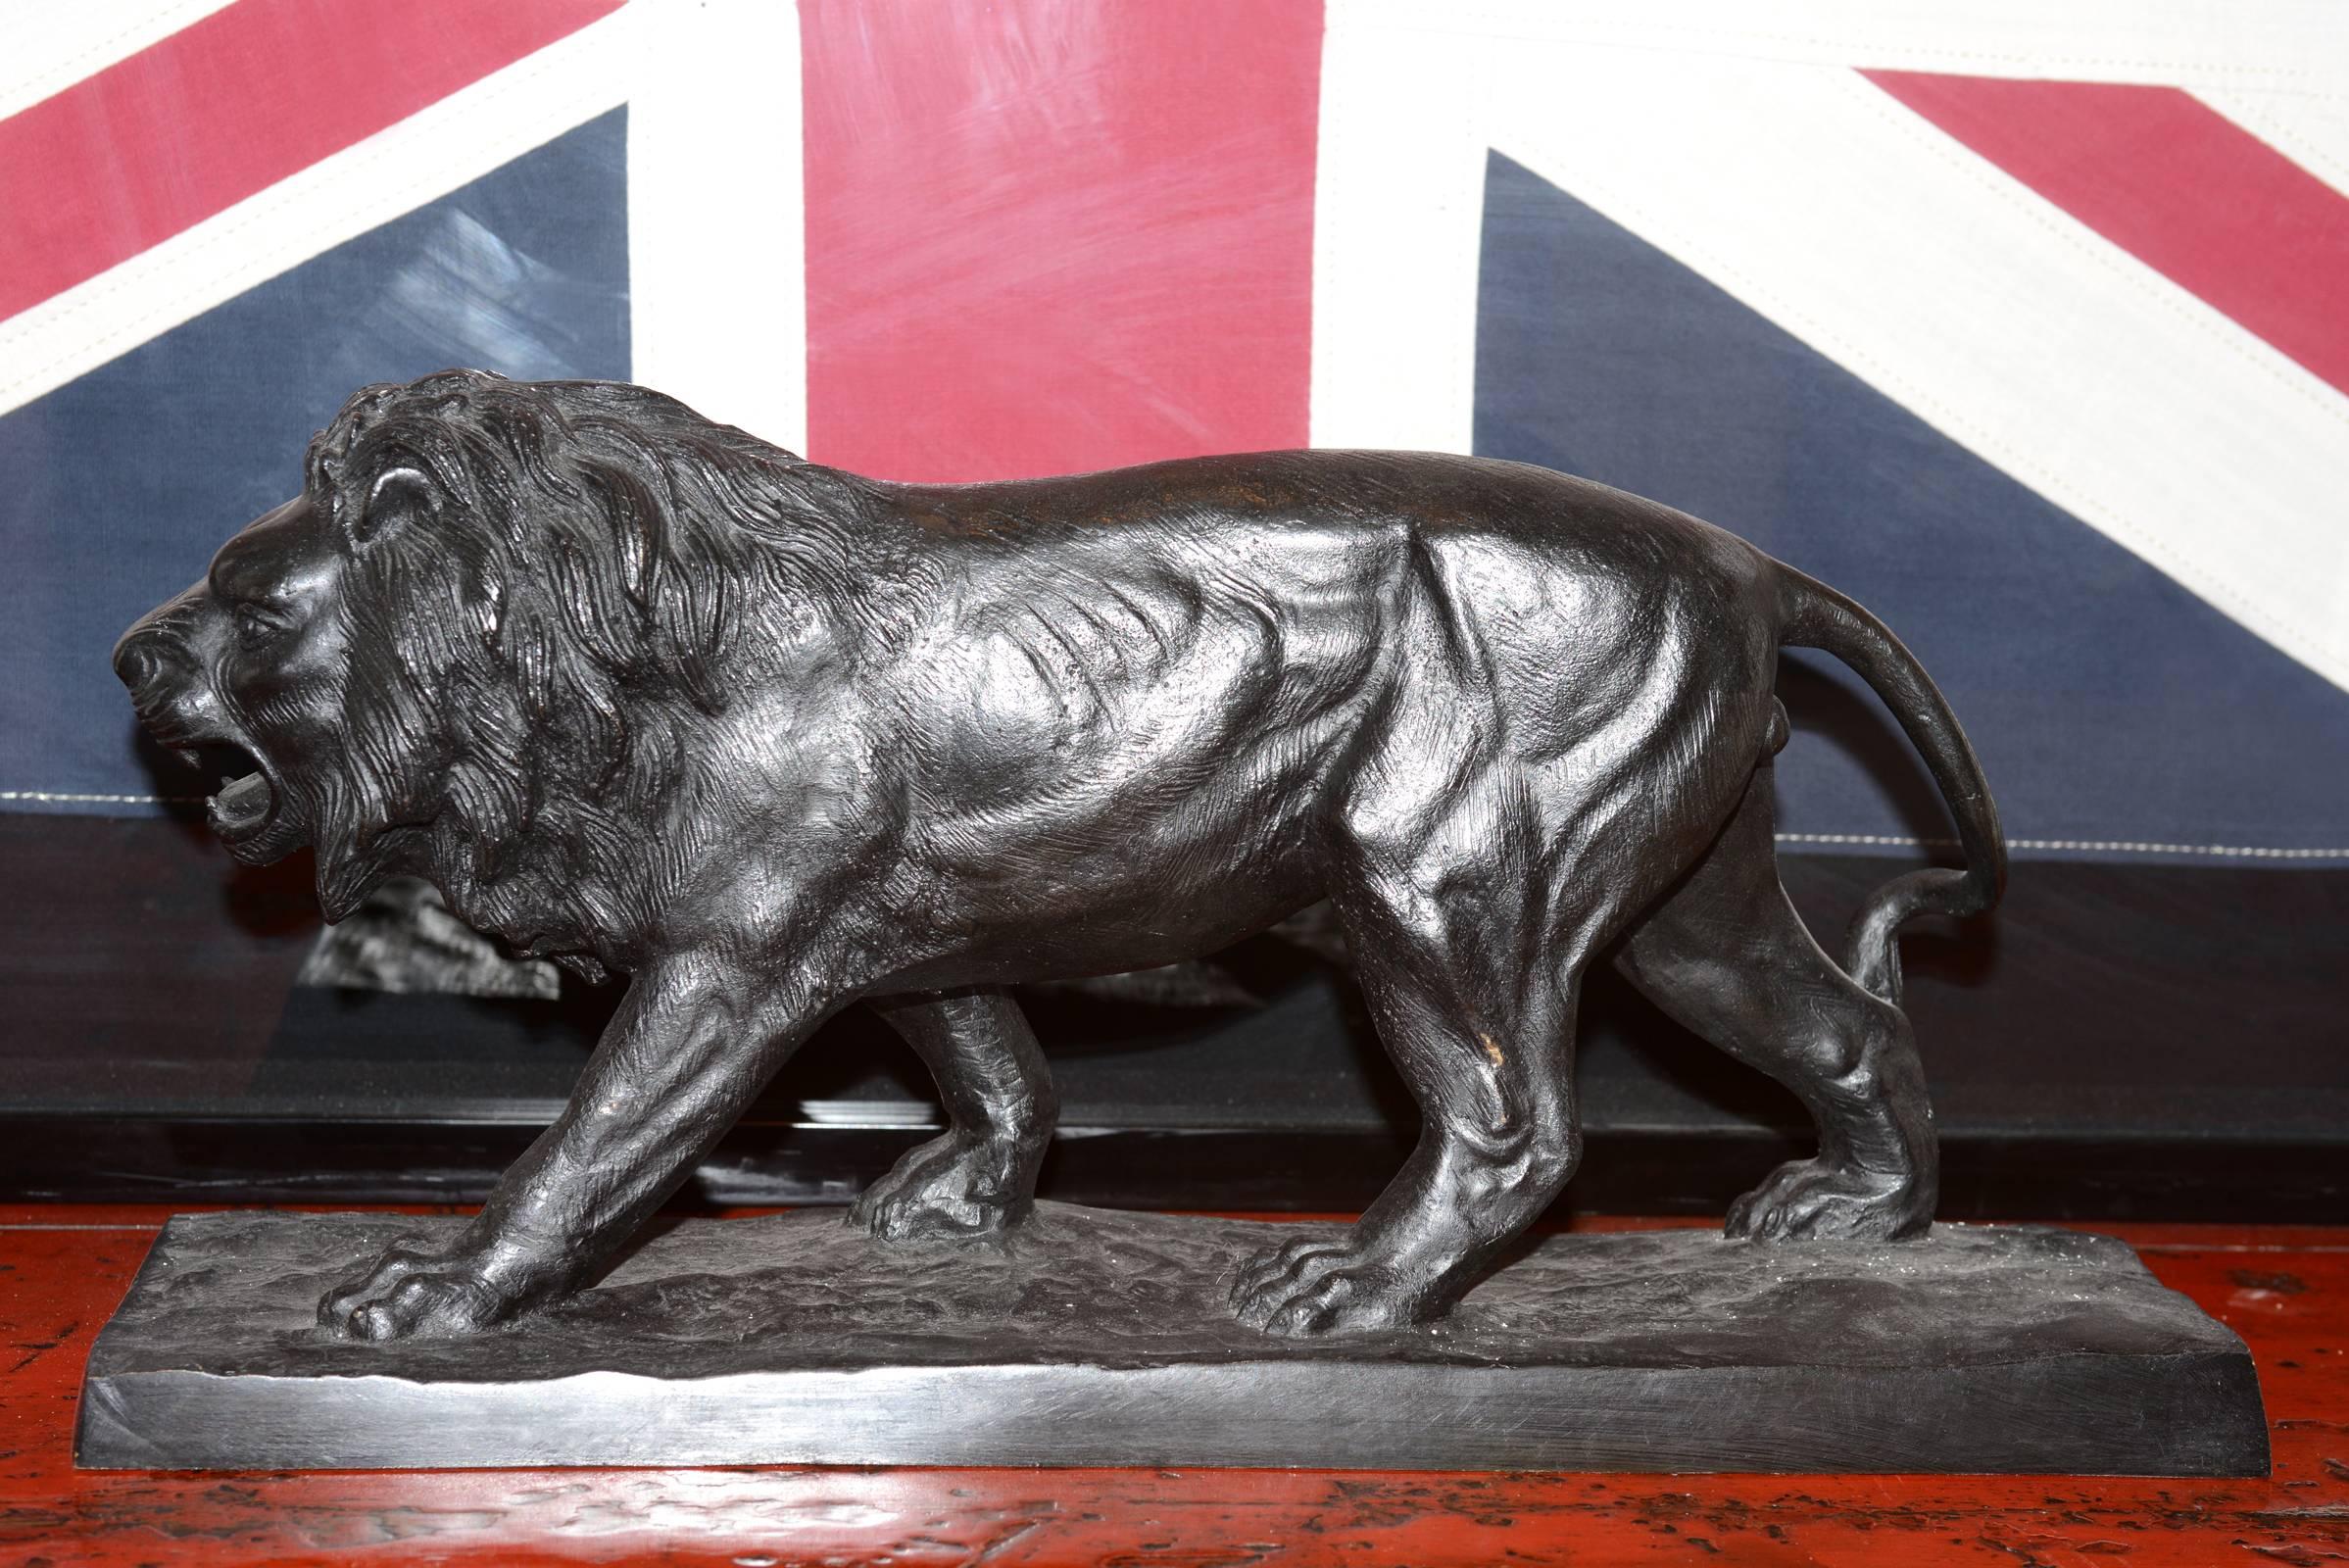 Sculpture lion in solid bronze black finish.
